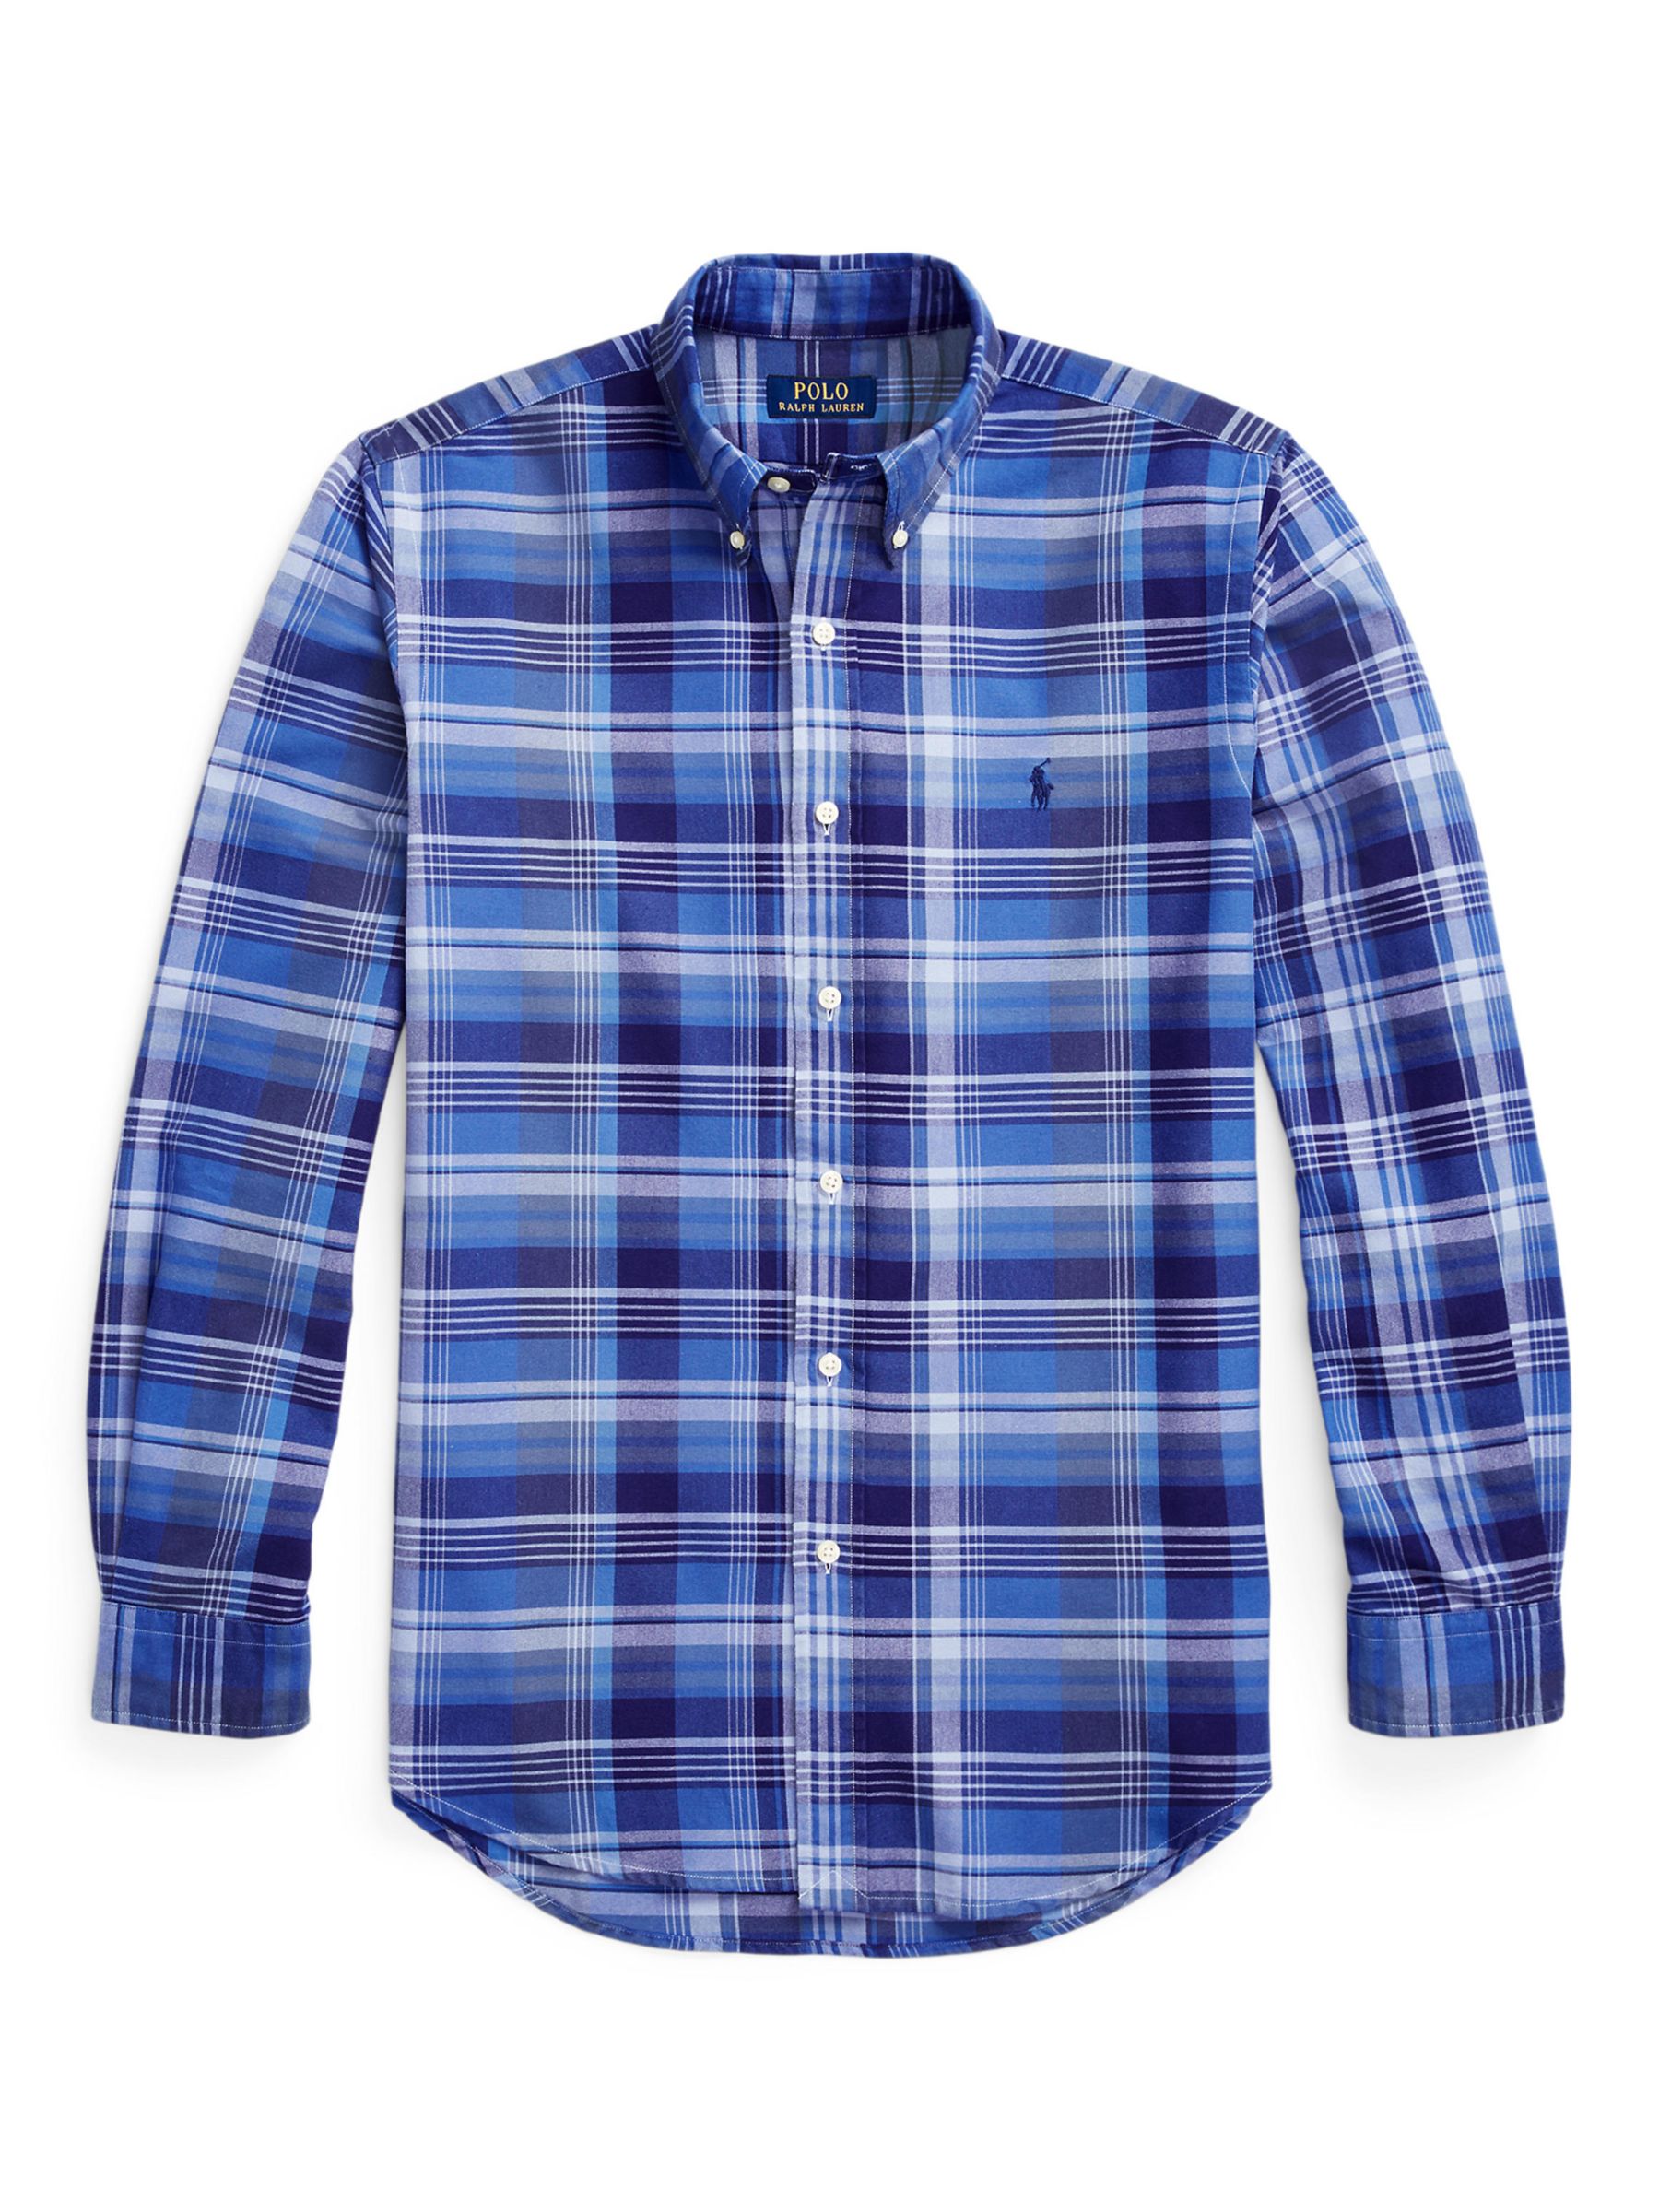 Ralph Lauren Slim Fit Plaid Oxford Check Shirt, Blue/Multi, S